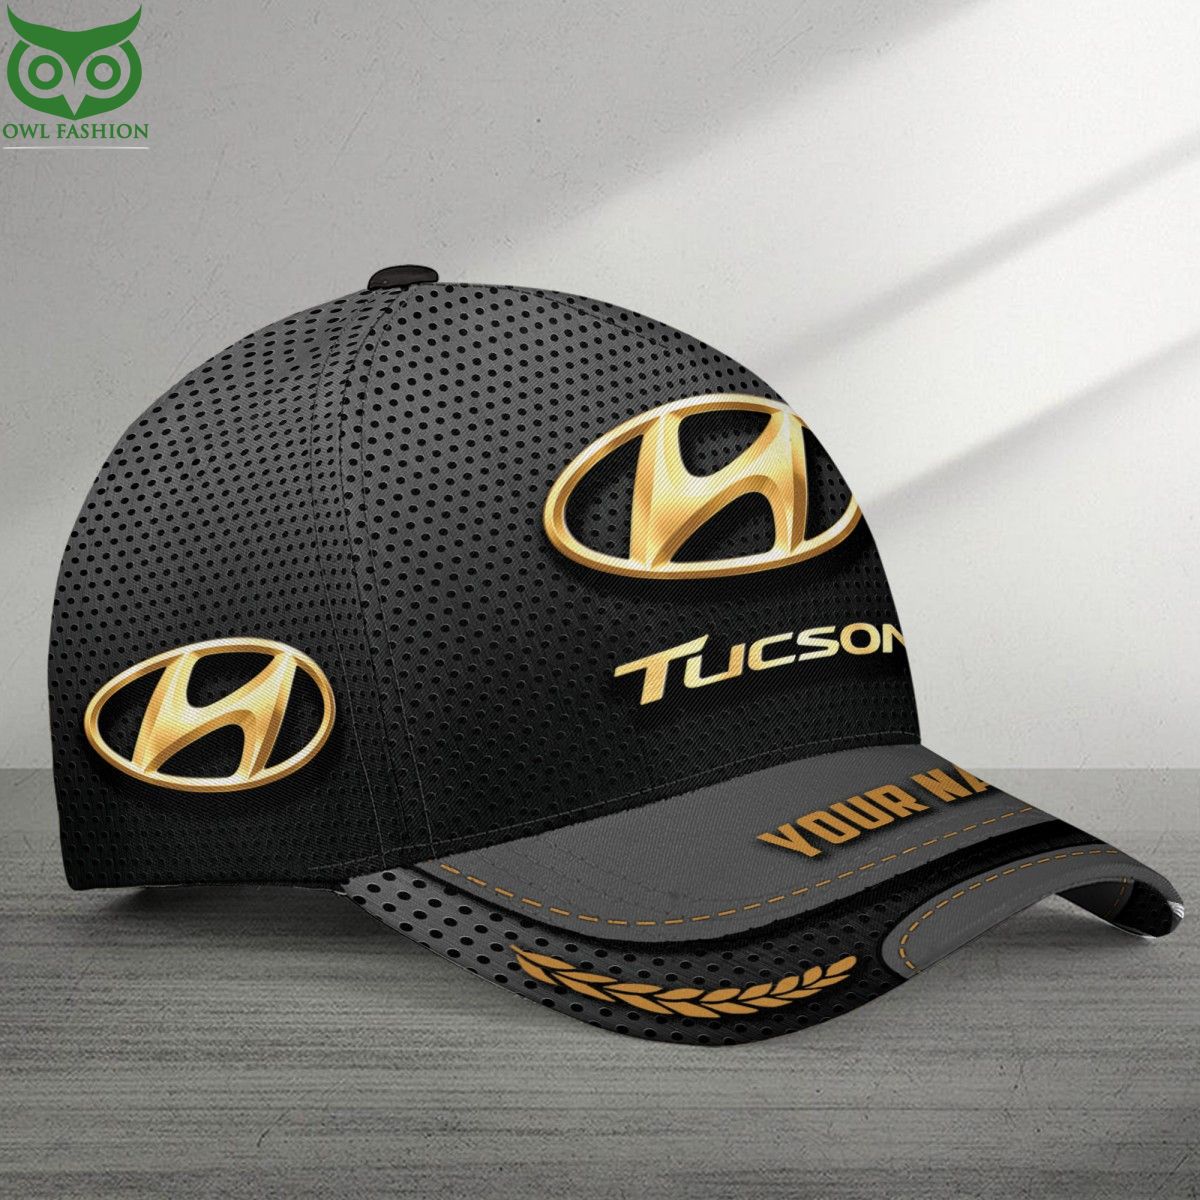 hyundai tucson luxury logo brand personalized classic cap 3 VYoyg.jpg